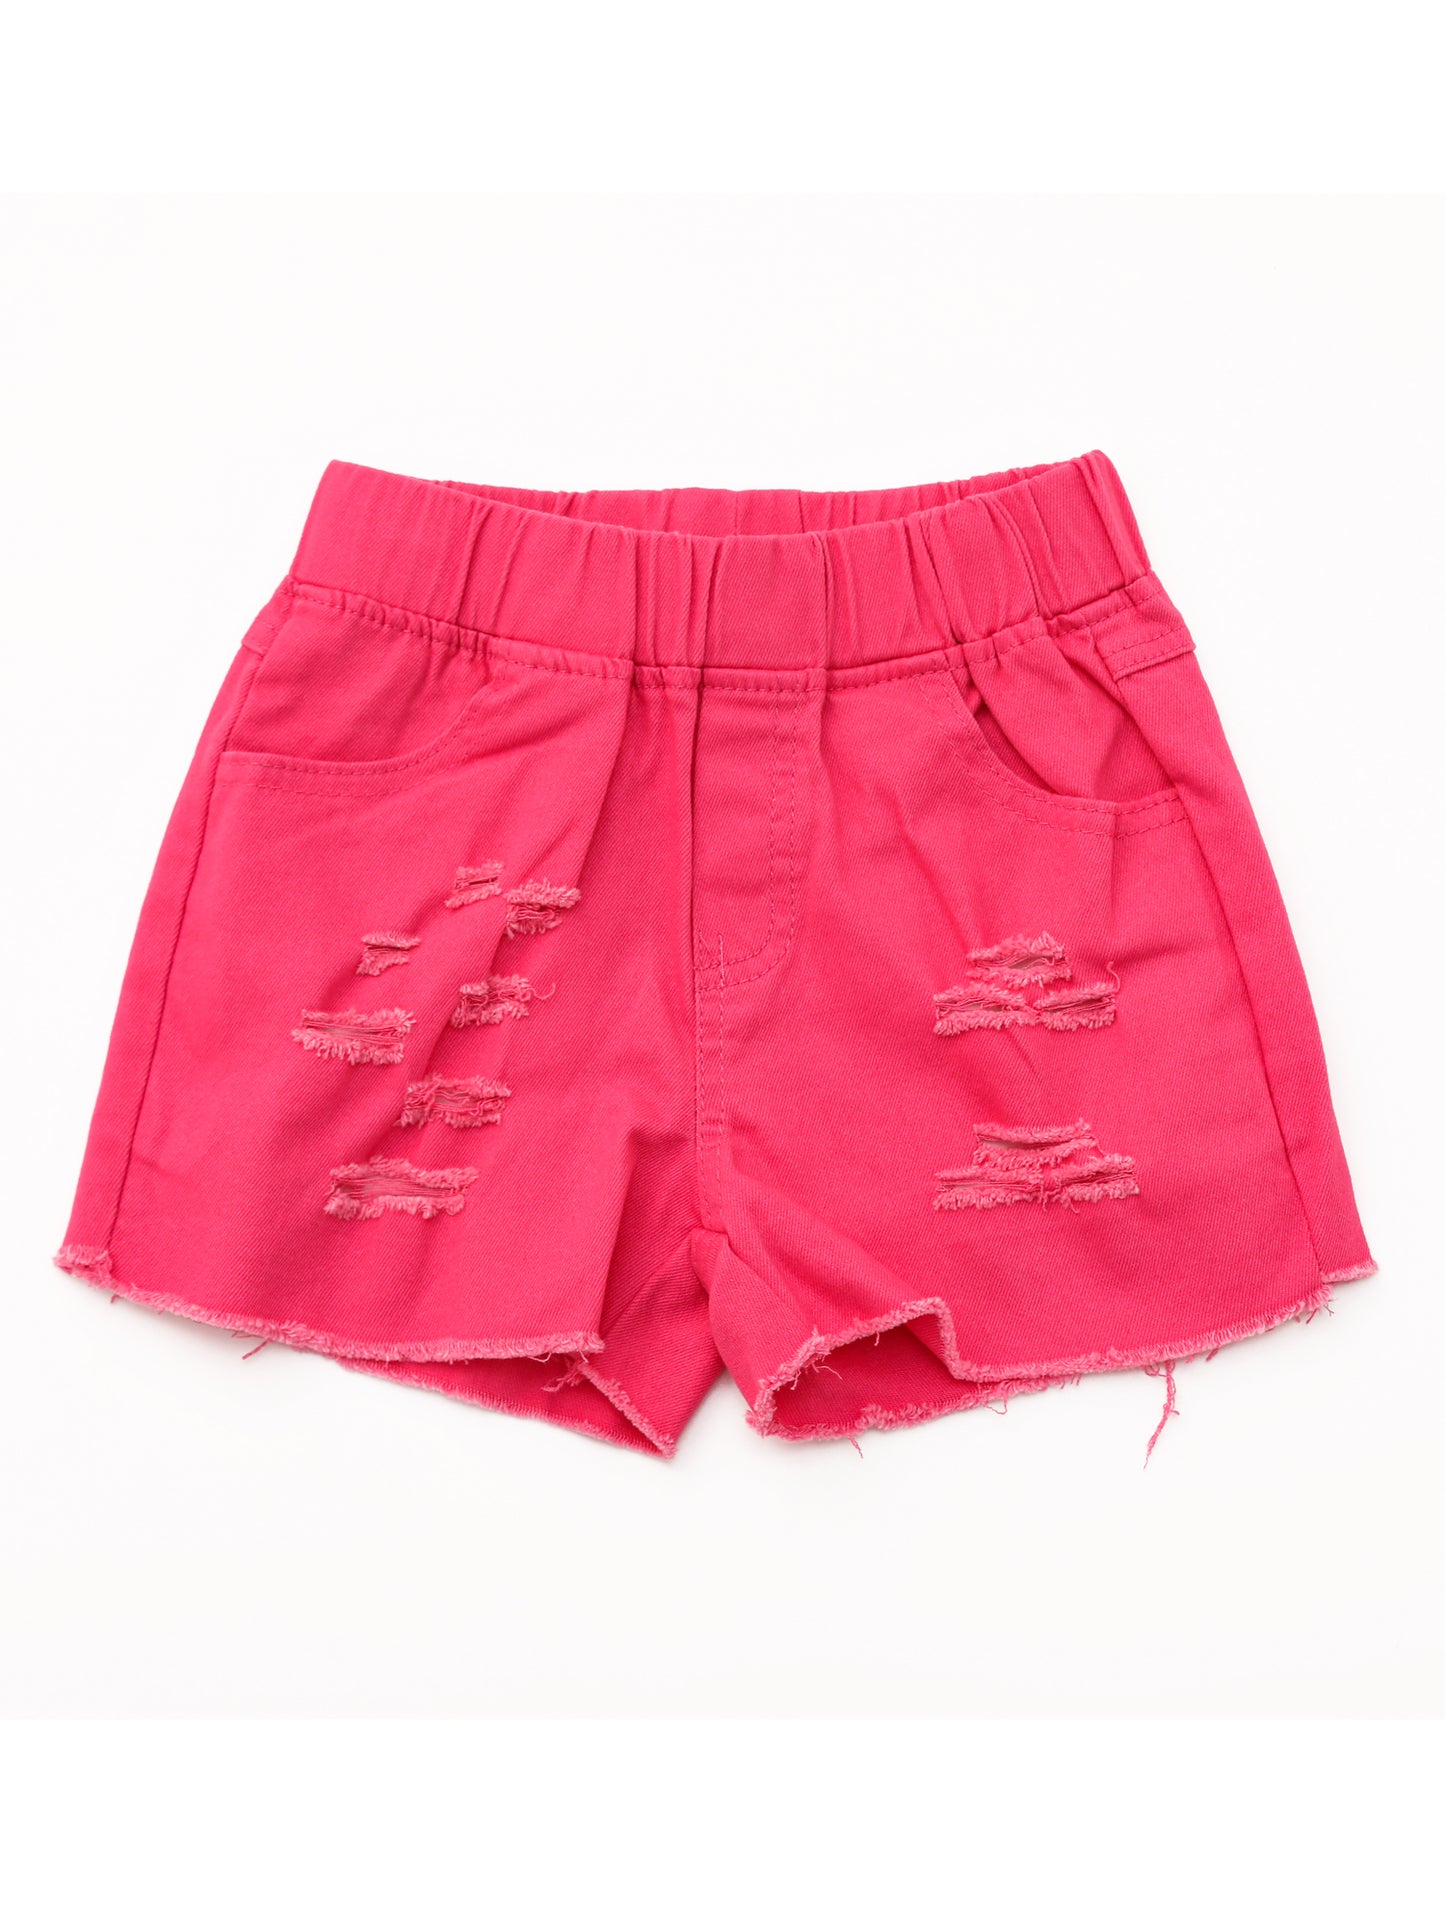 Girls Distressed Hot Pink Denim Shorts